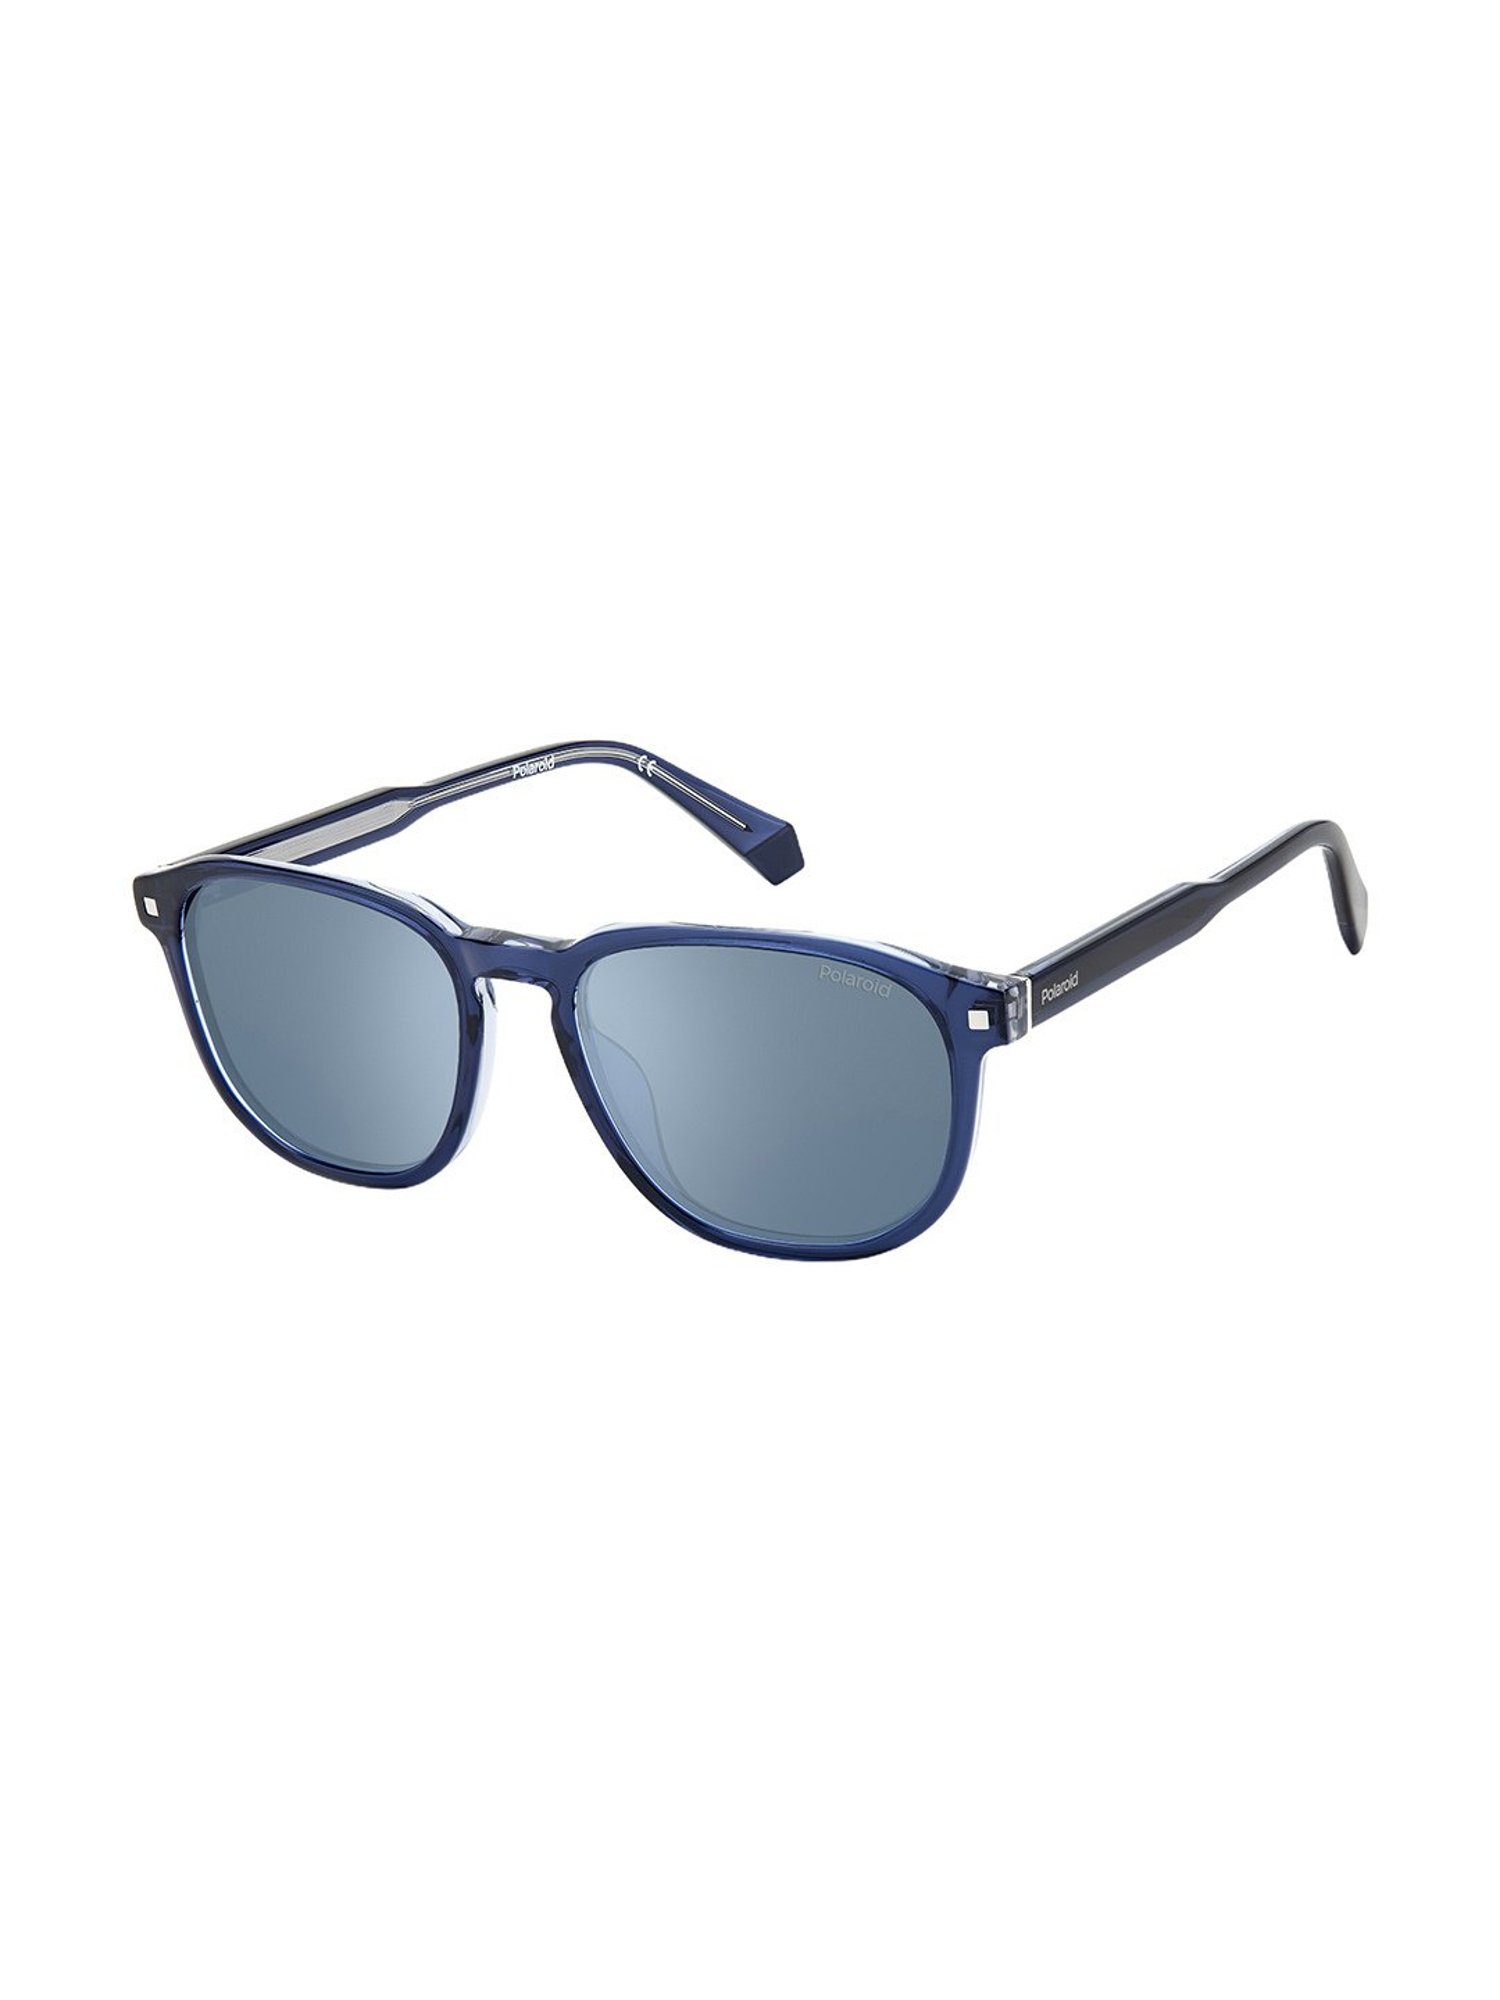 MyRunway | Shop Polaroid Grey Blue Multilayer Polarized Rectangular  Sunglasses for Kids from MyRunway.co.za